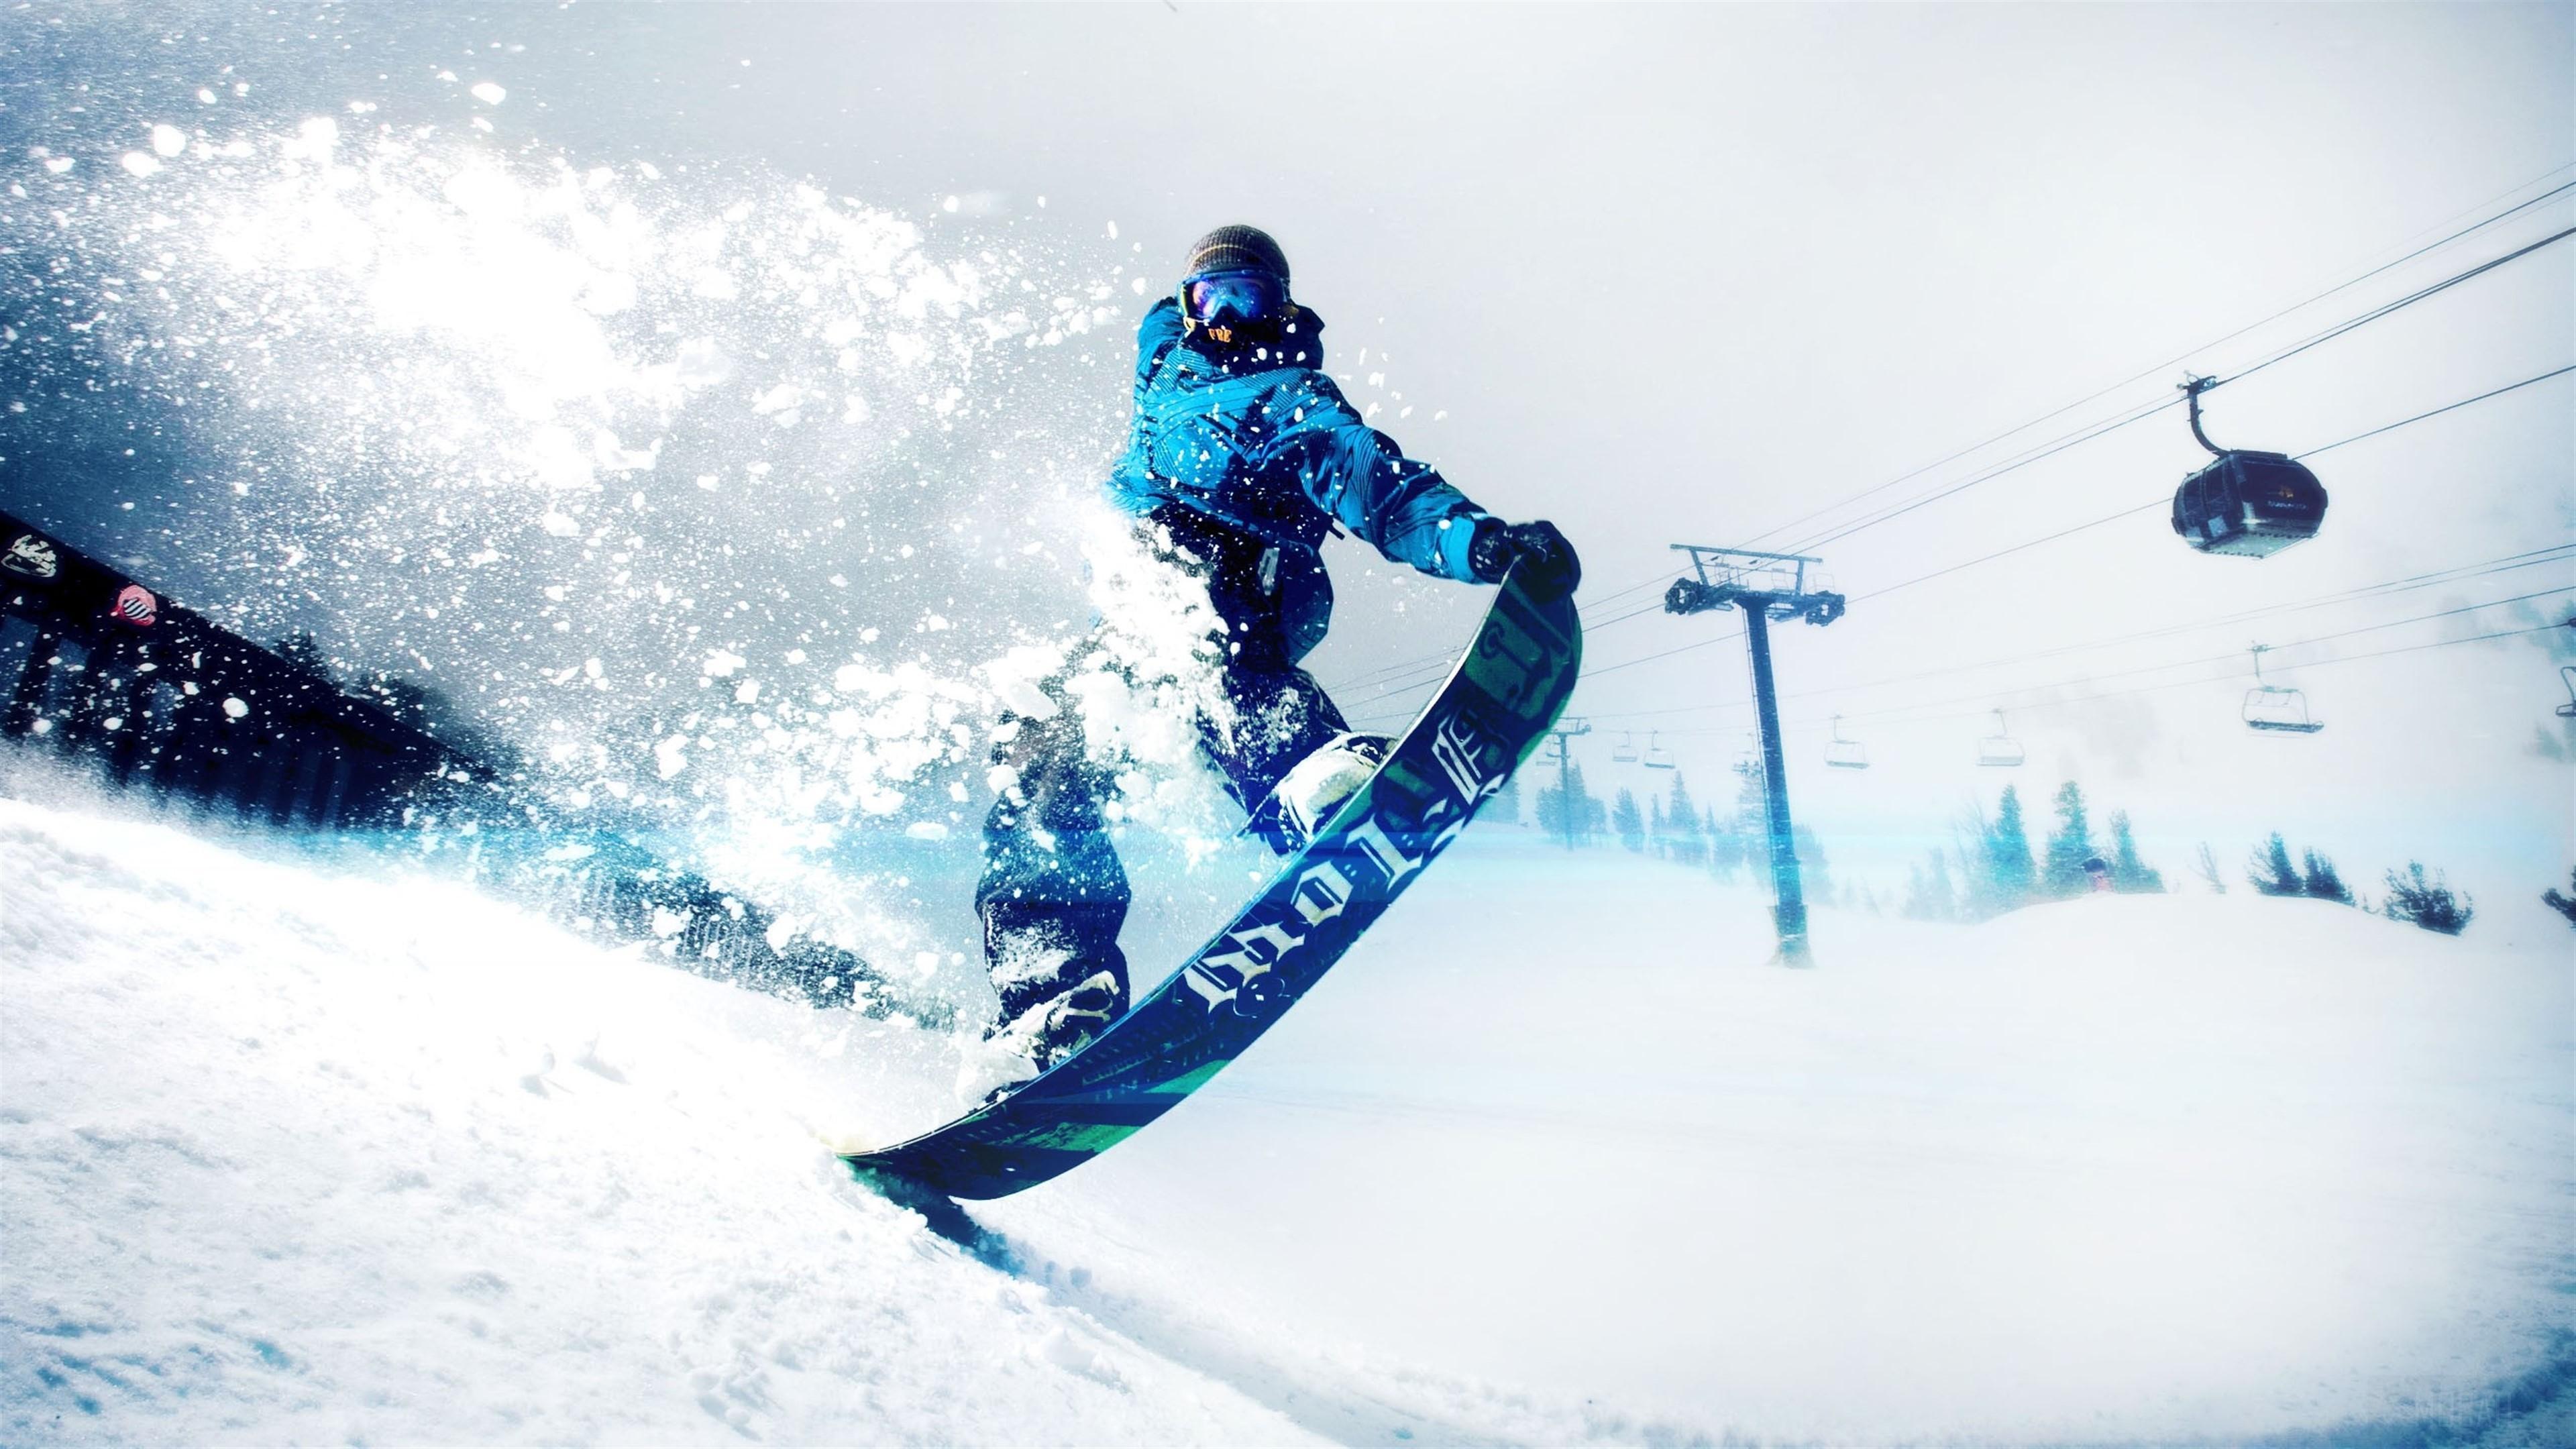 HD wallpaper, Windows Ski Snowboard Outdoor 4K